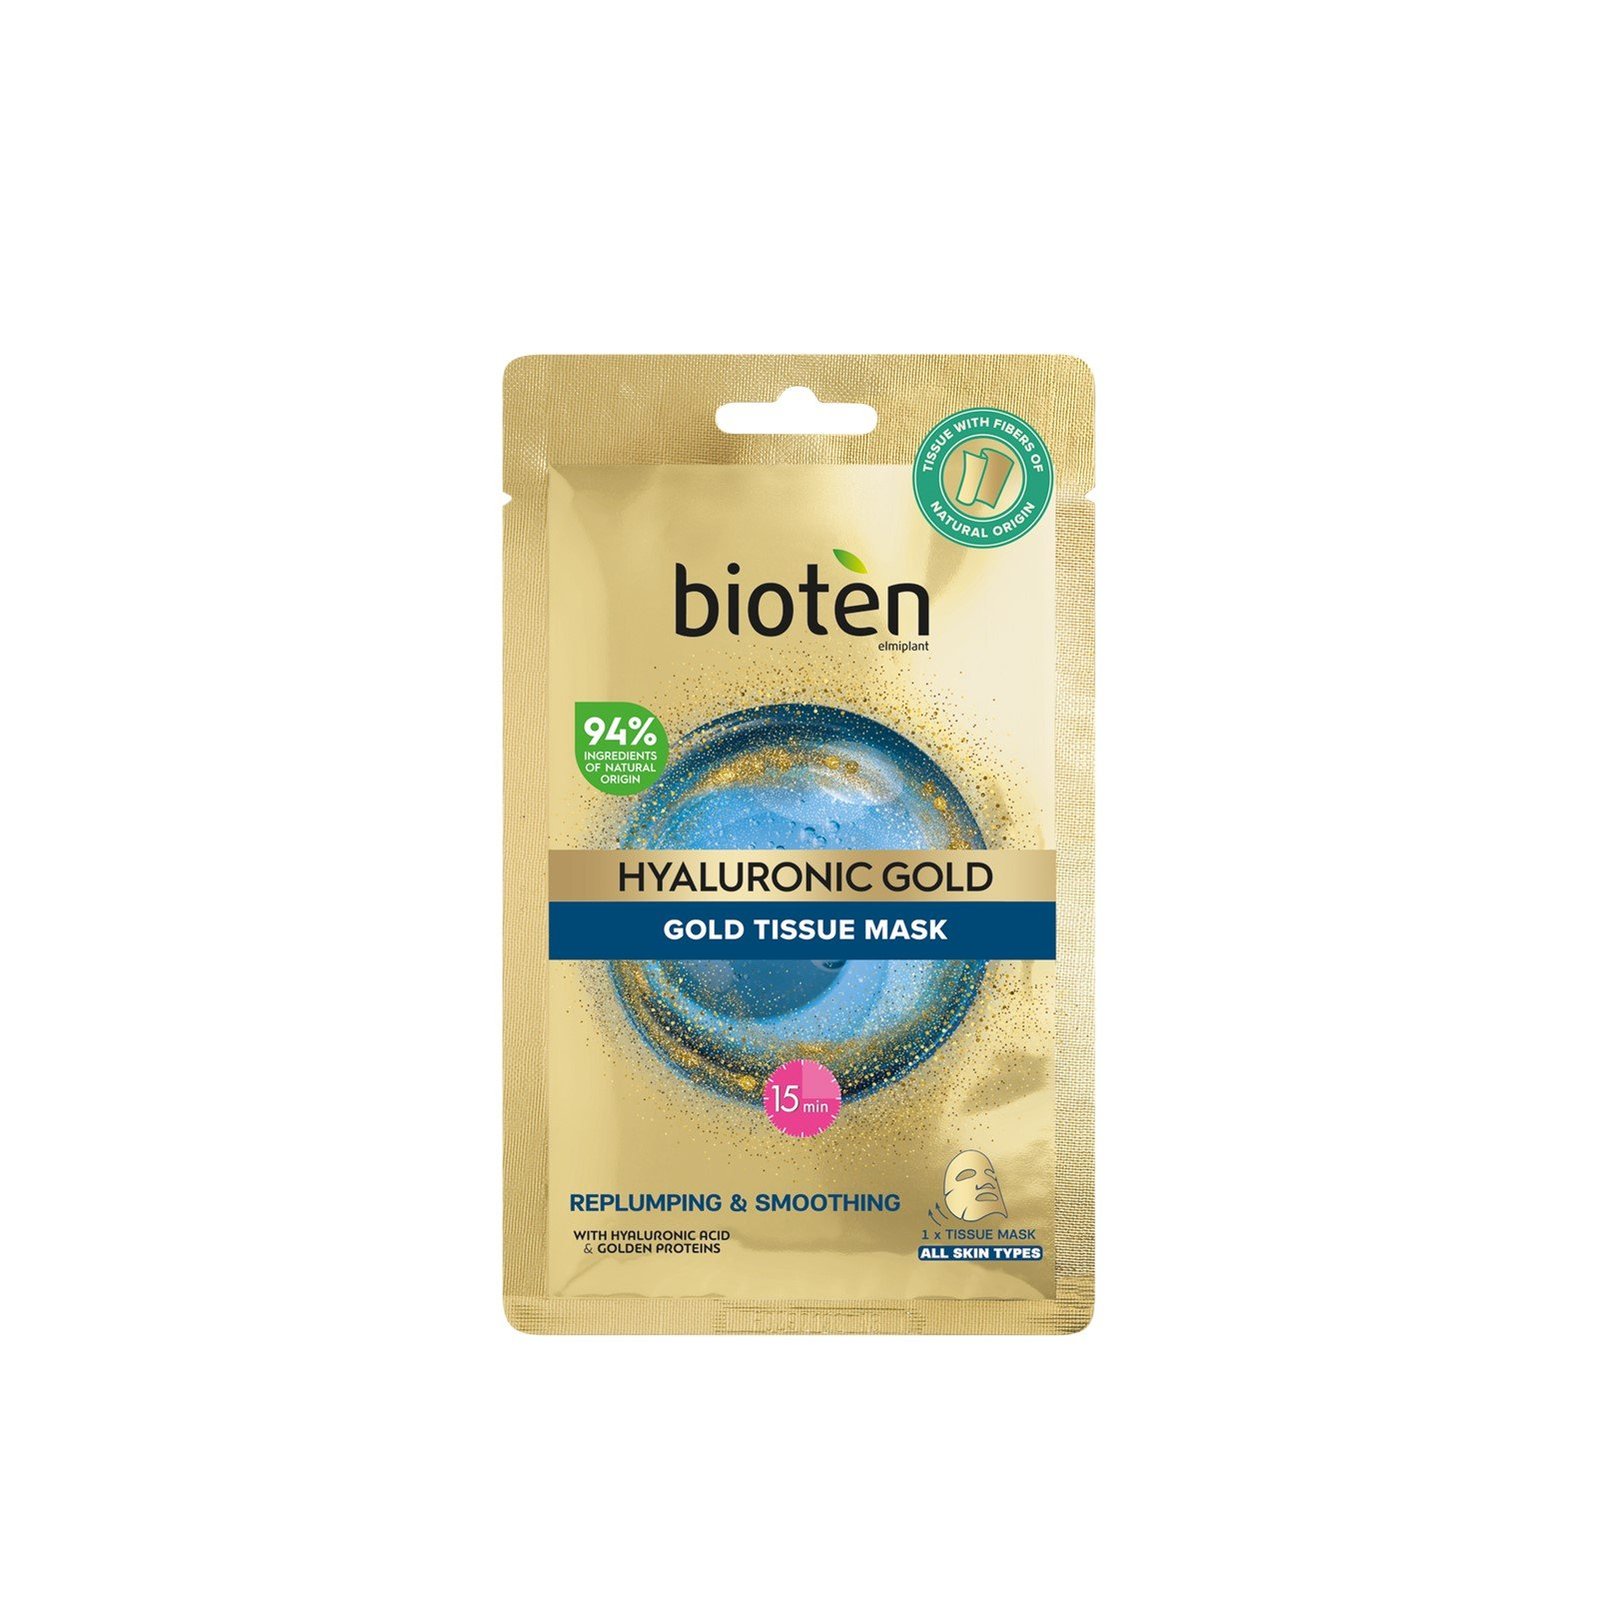 bioten Hyaluronic Gold Replumping & Smoothing Gold Tissue Mask x1